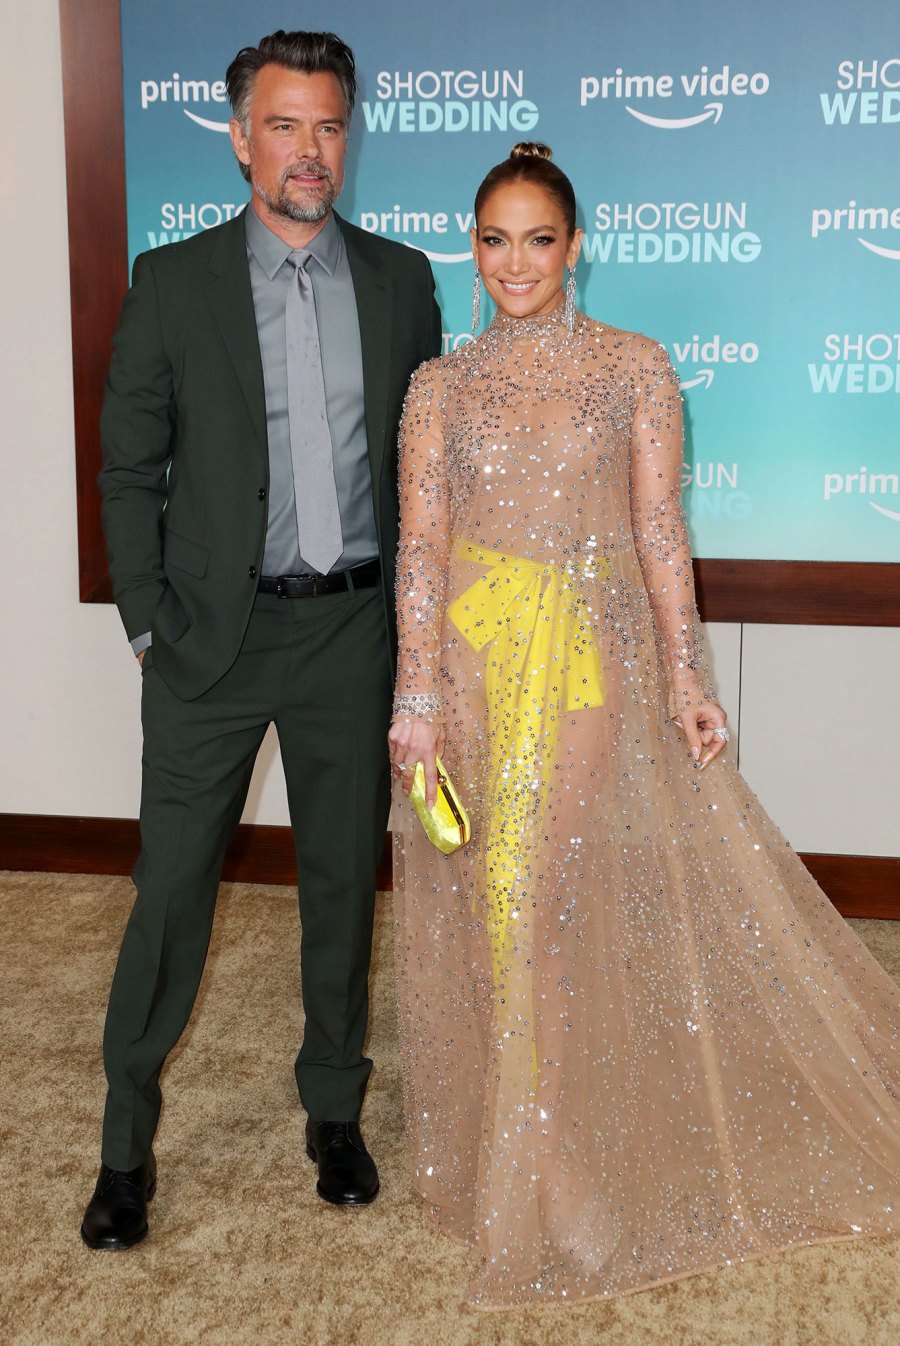 Jennifer Lopez Shotgun Wedding Premiere Valentino Sheer Dress 6 Josh Duhamel